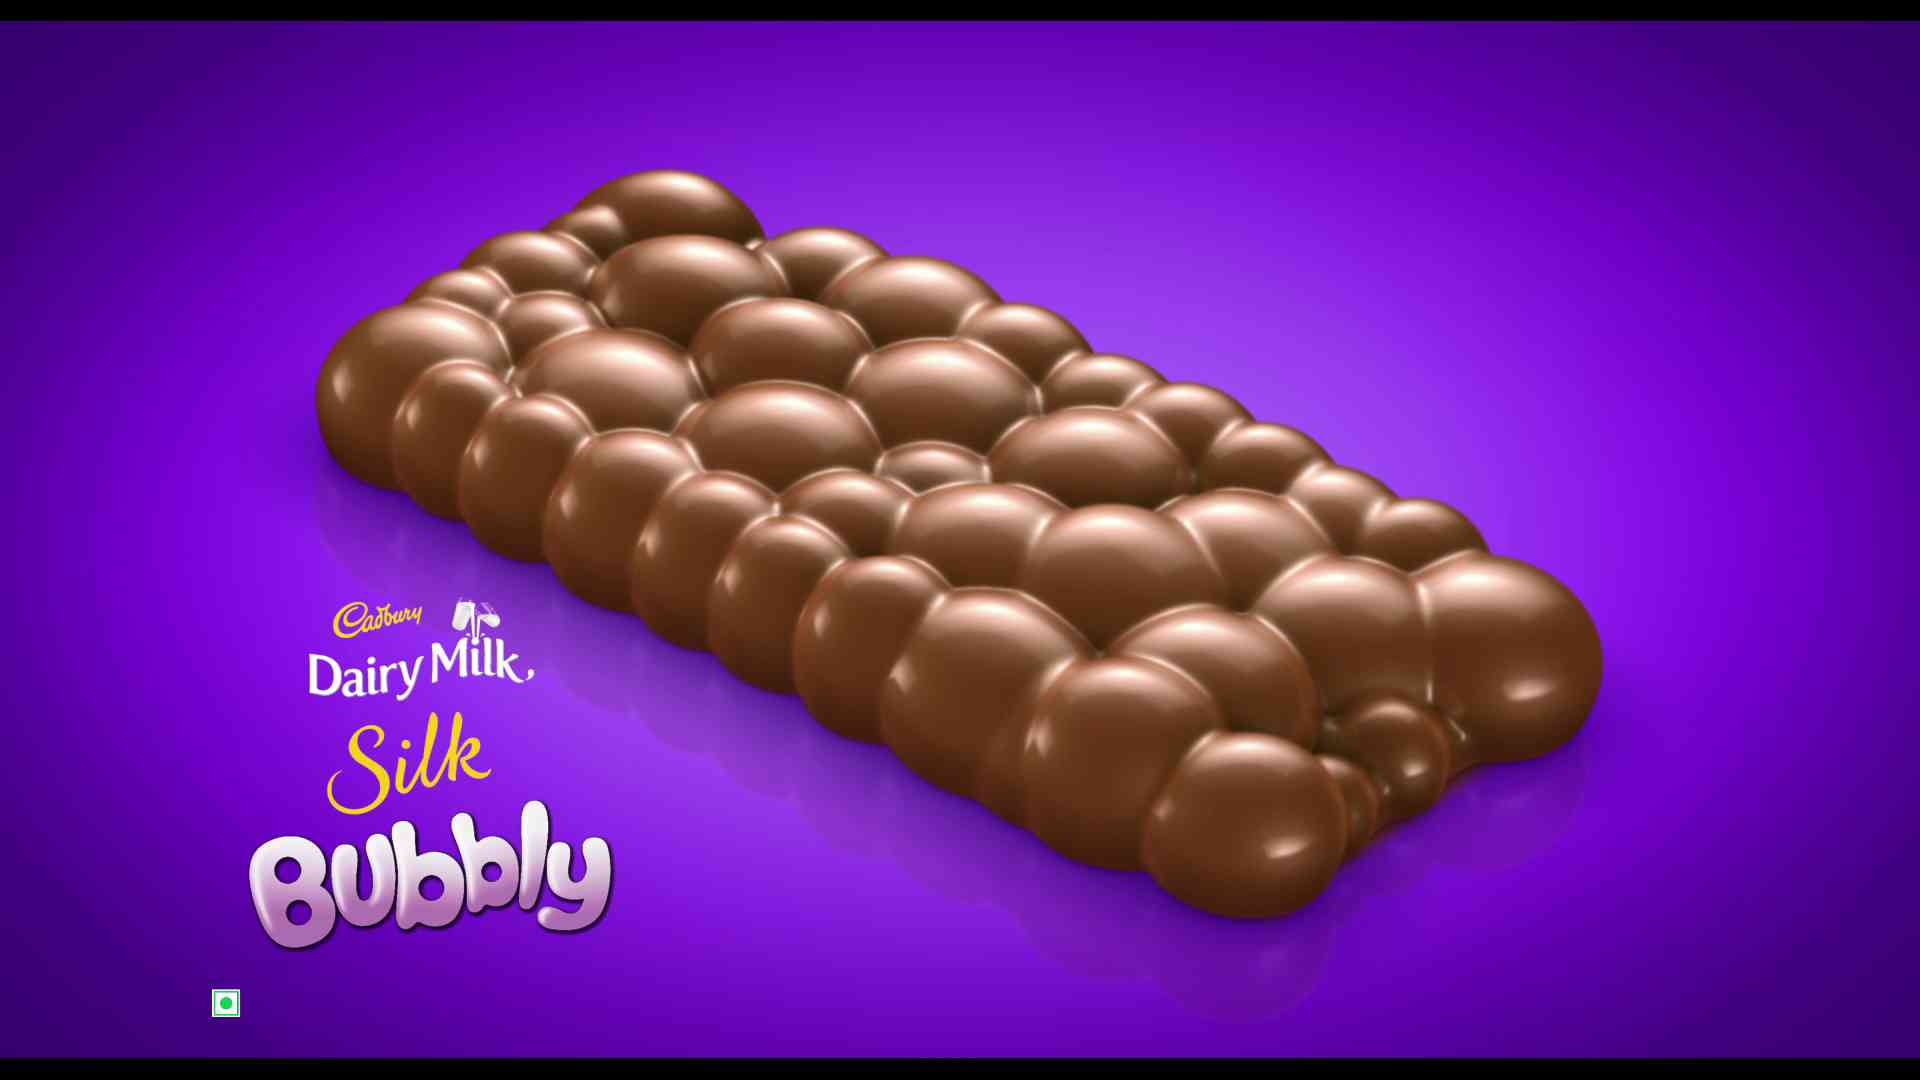 Introducing the new Cadbury Dairy Milk Silk Bubbly